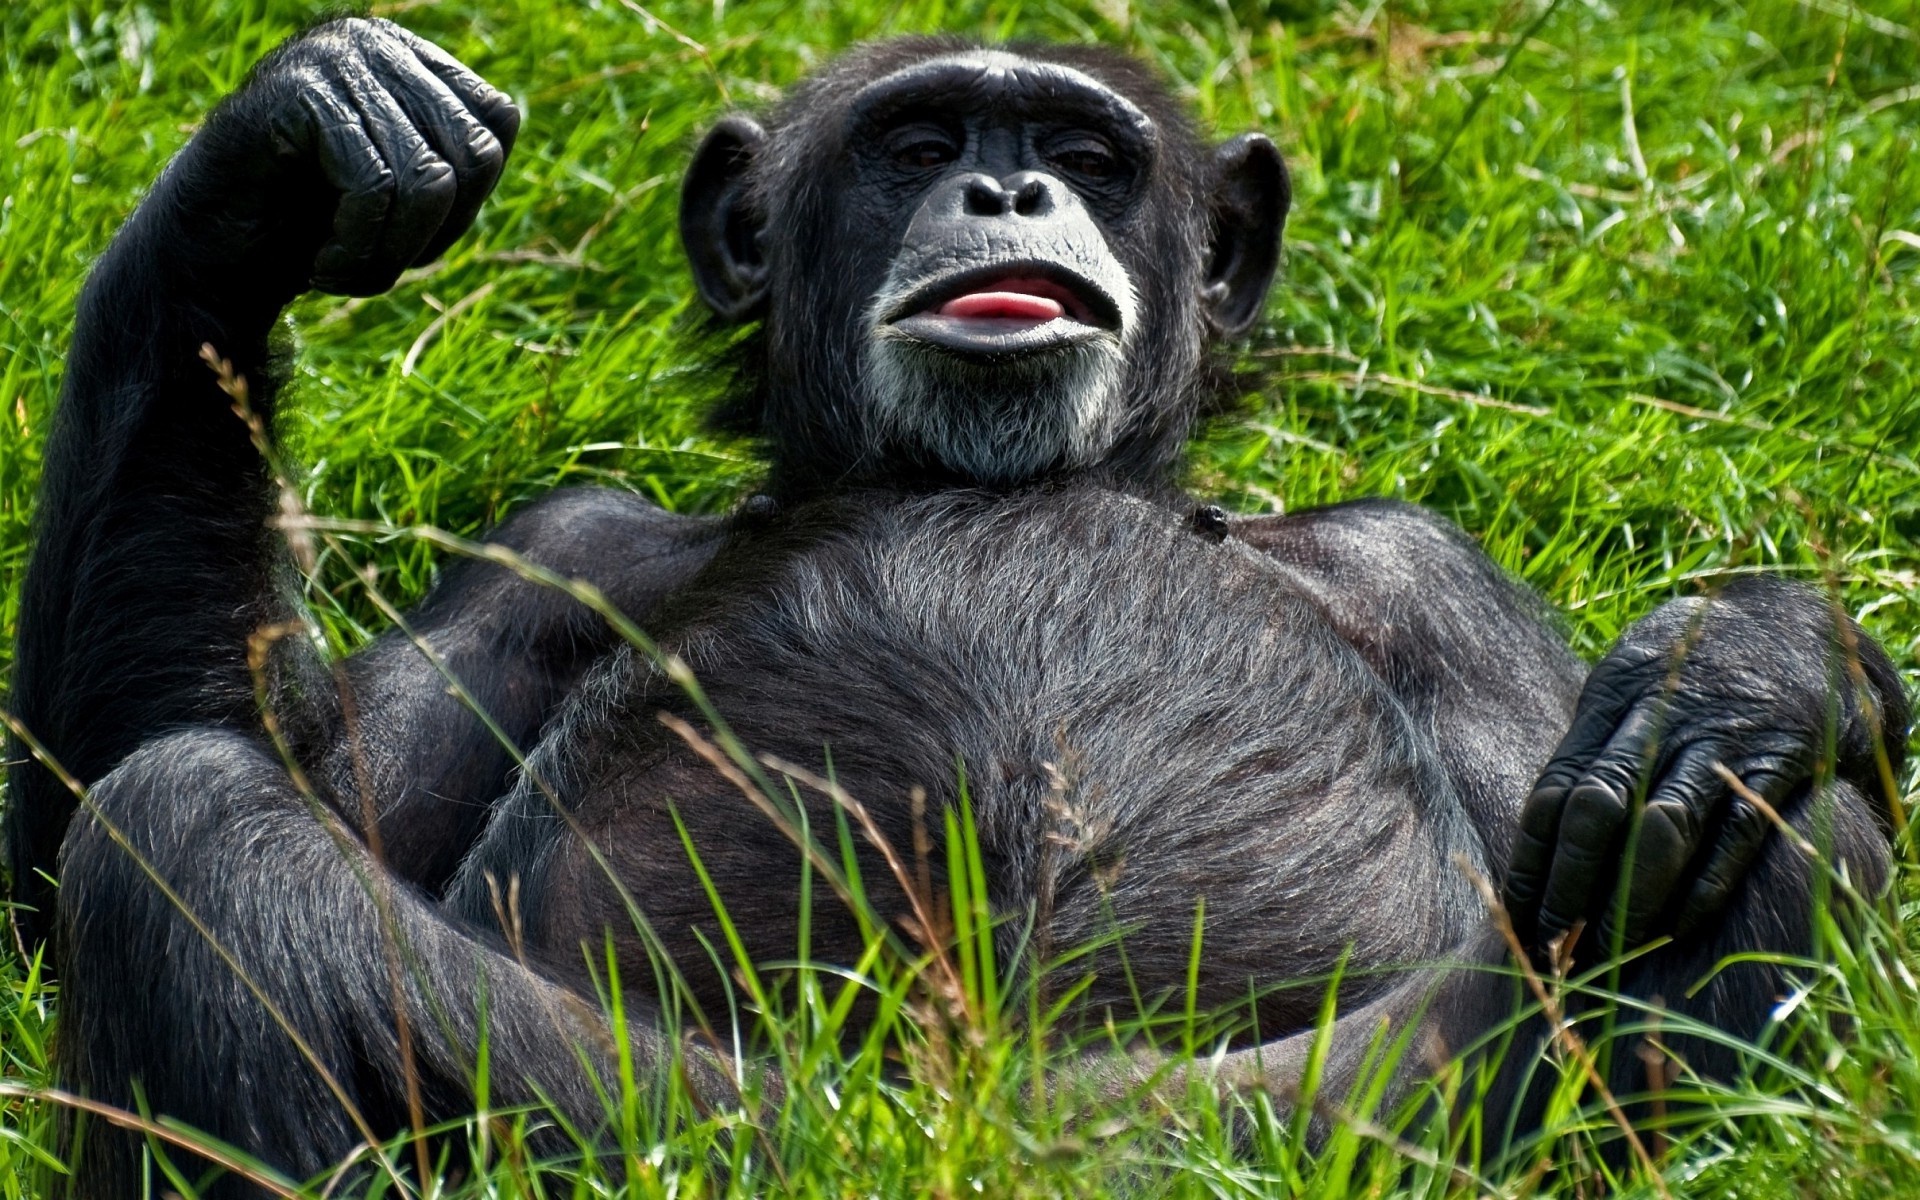 Chimpanzee, Funny monkey wallpaper, Desktop wallpapers, Humorous snapshots, 1920x1200 HD Desktop